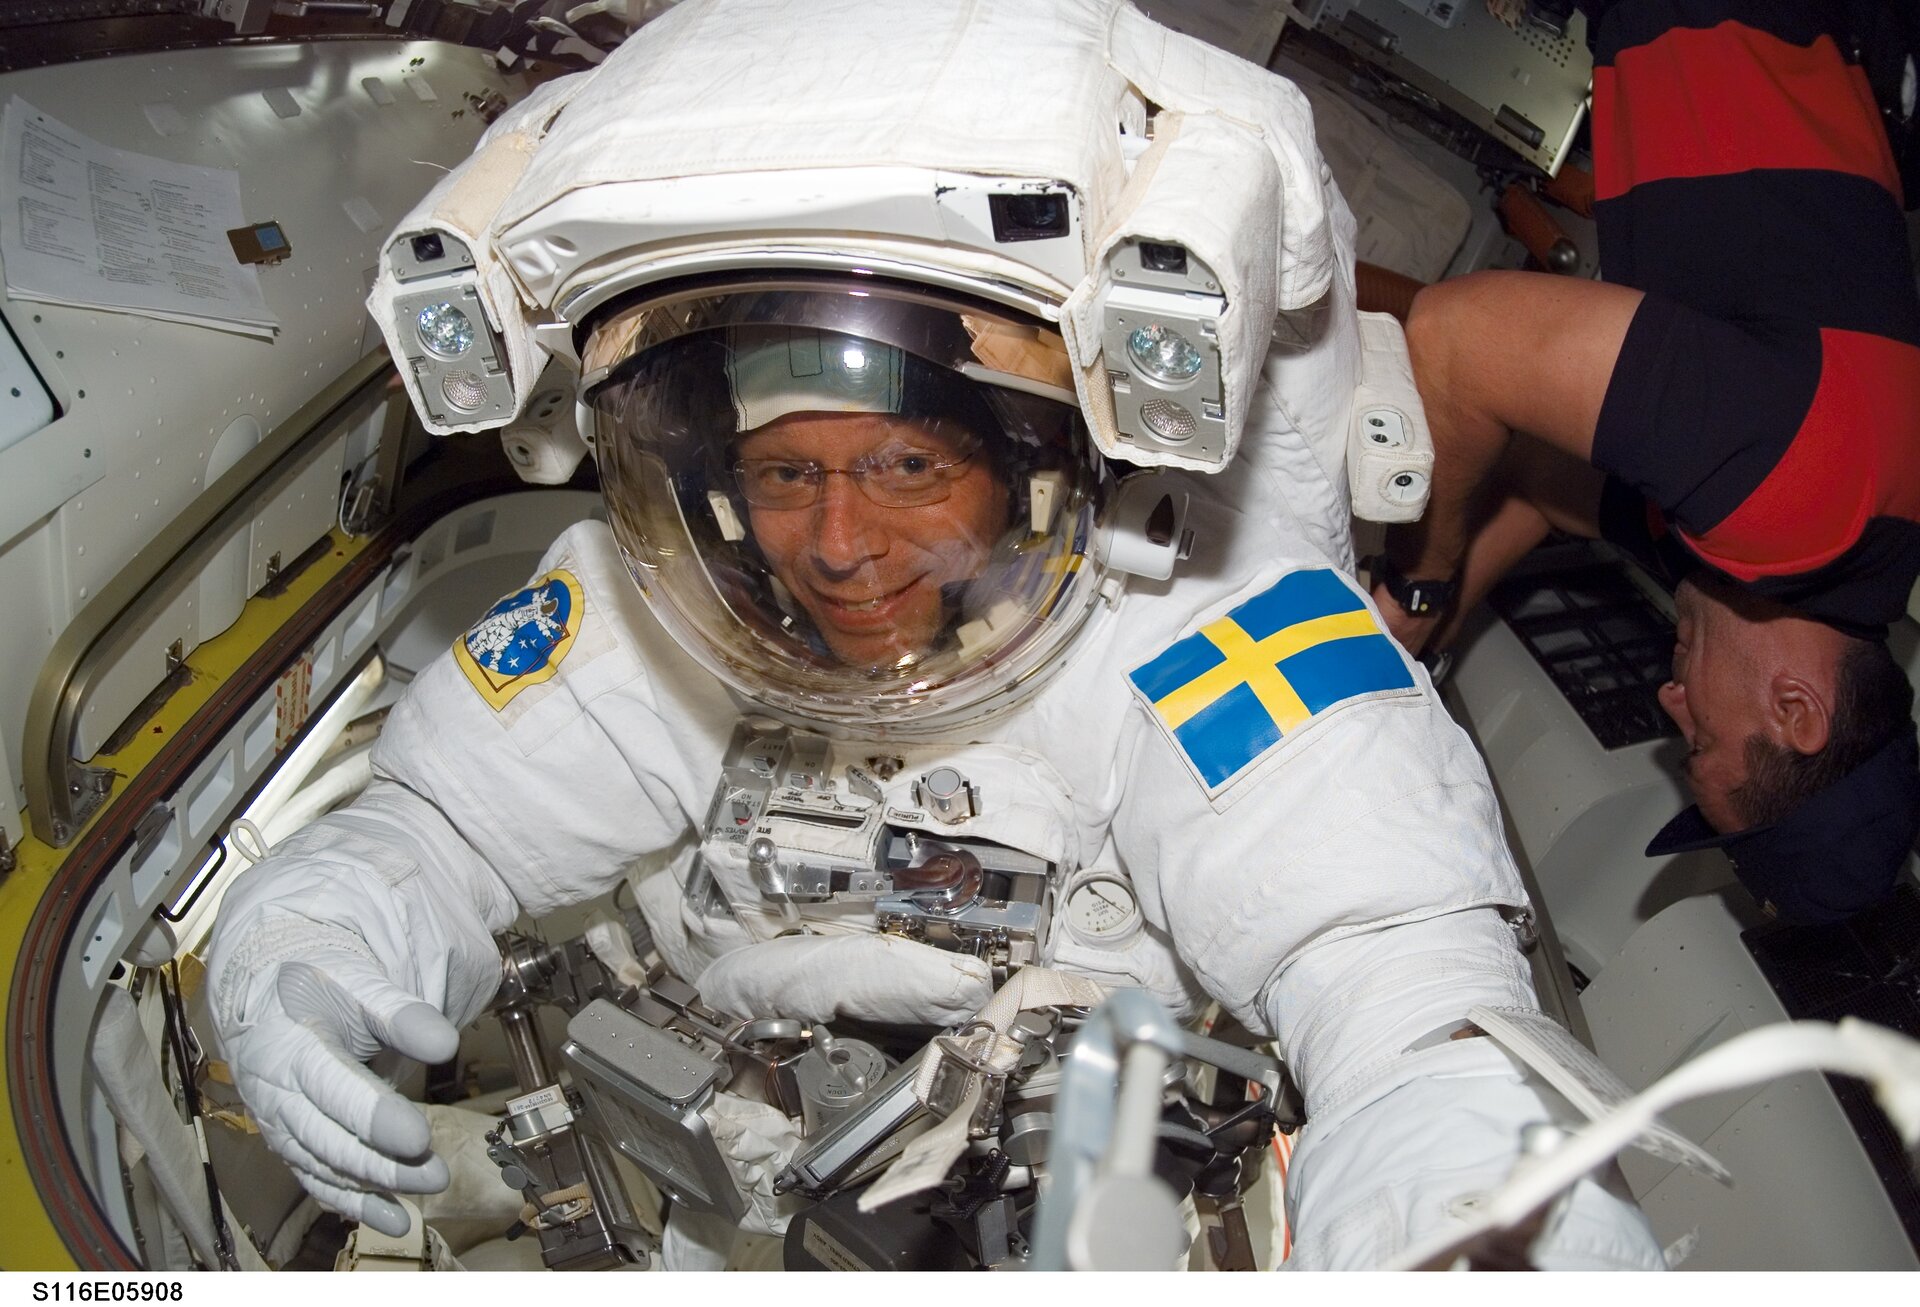 Christer Fuglesang will start his second spacewalk at 21:12 CET (20:12 UT)